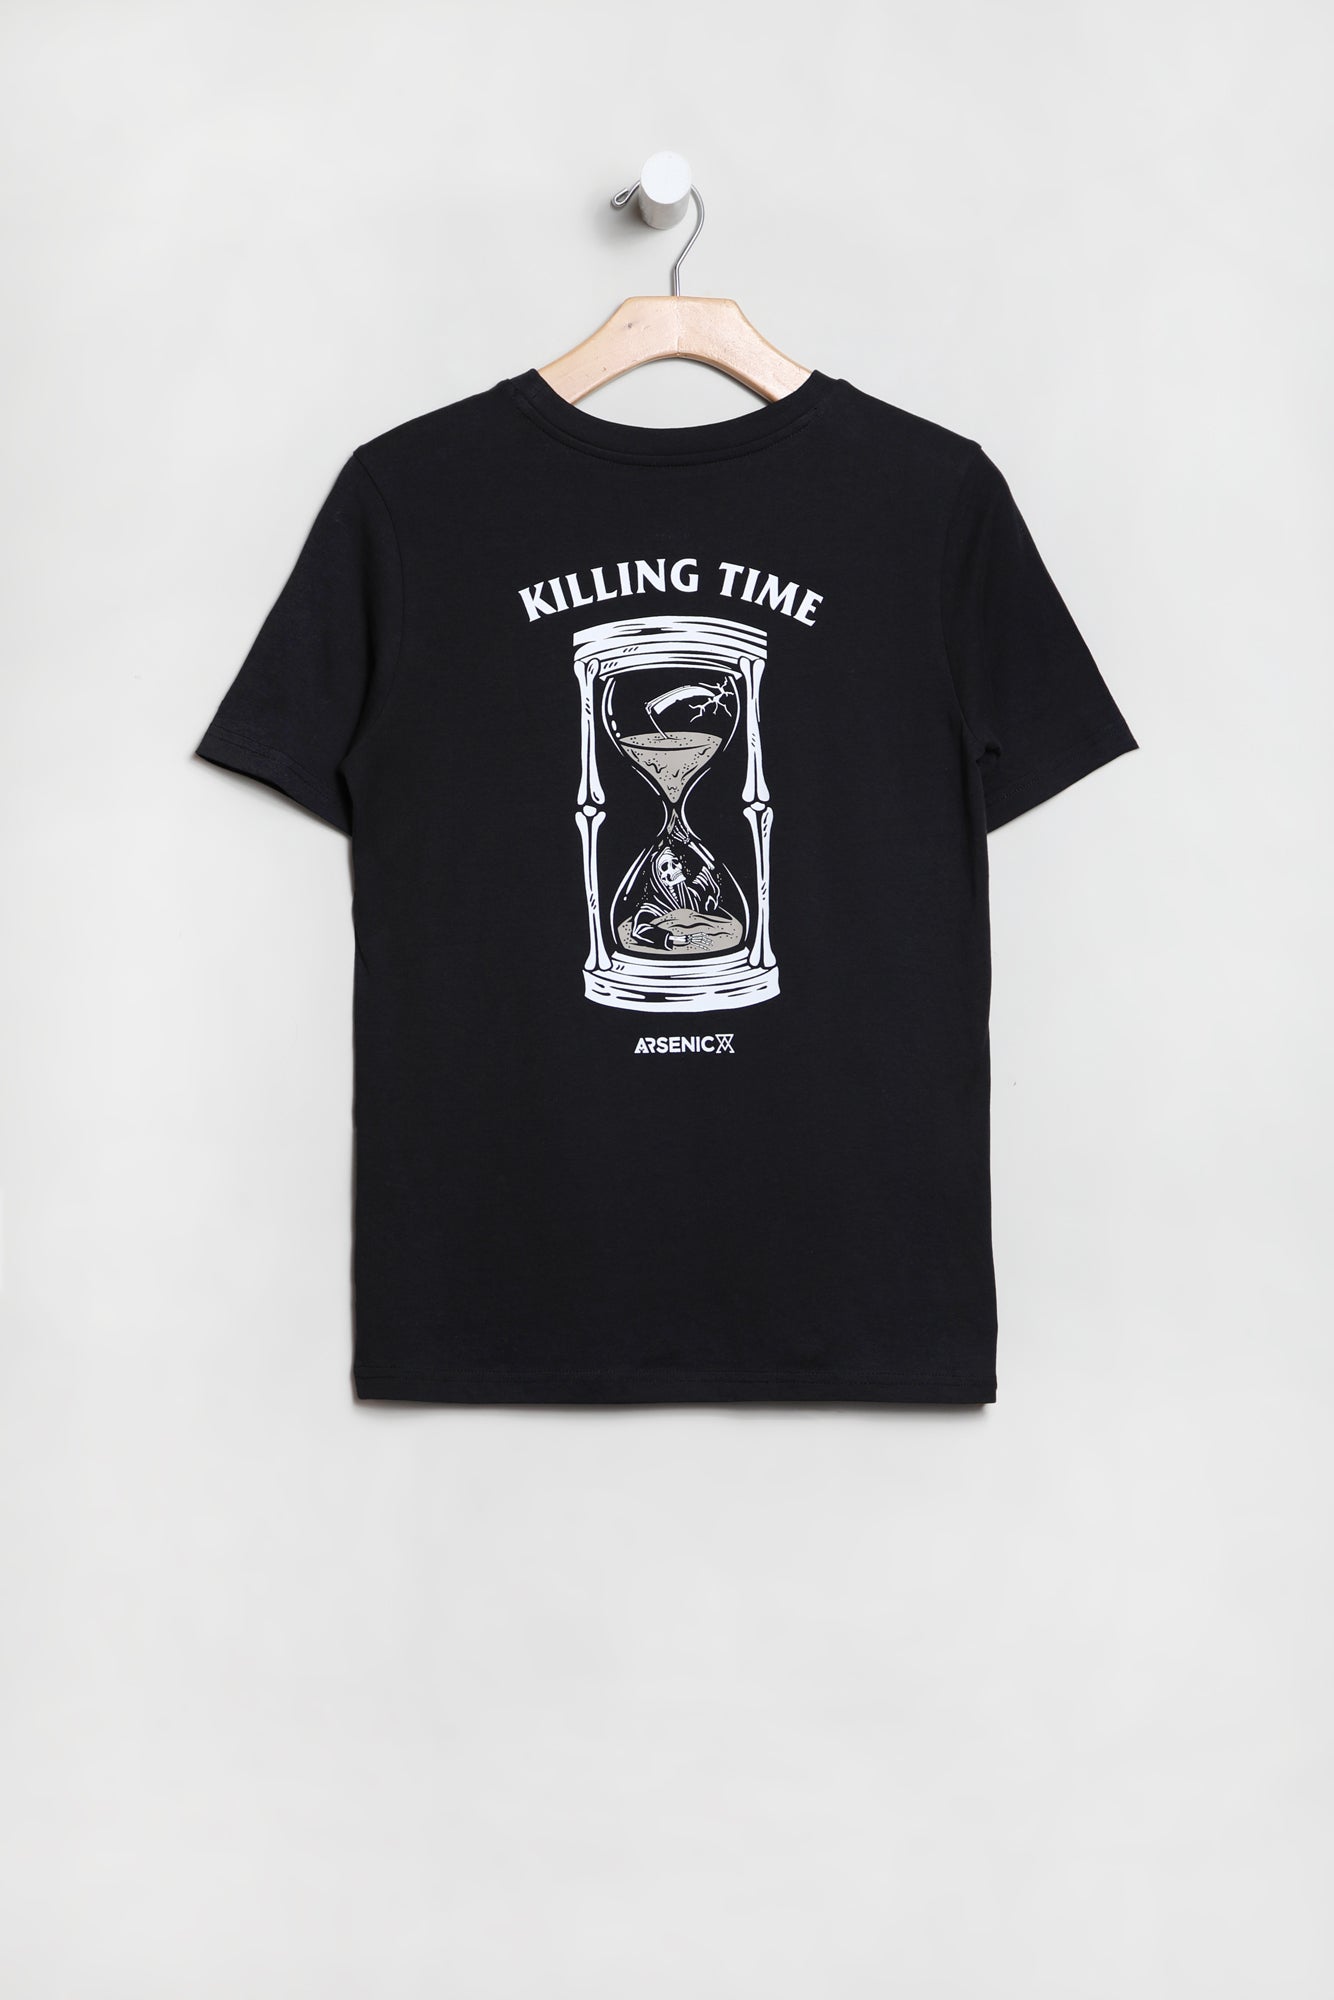 Arsenic Youth Killing Time T-Shirt - Black /